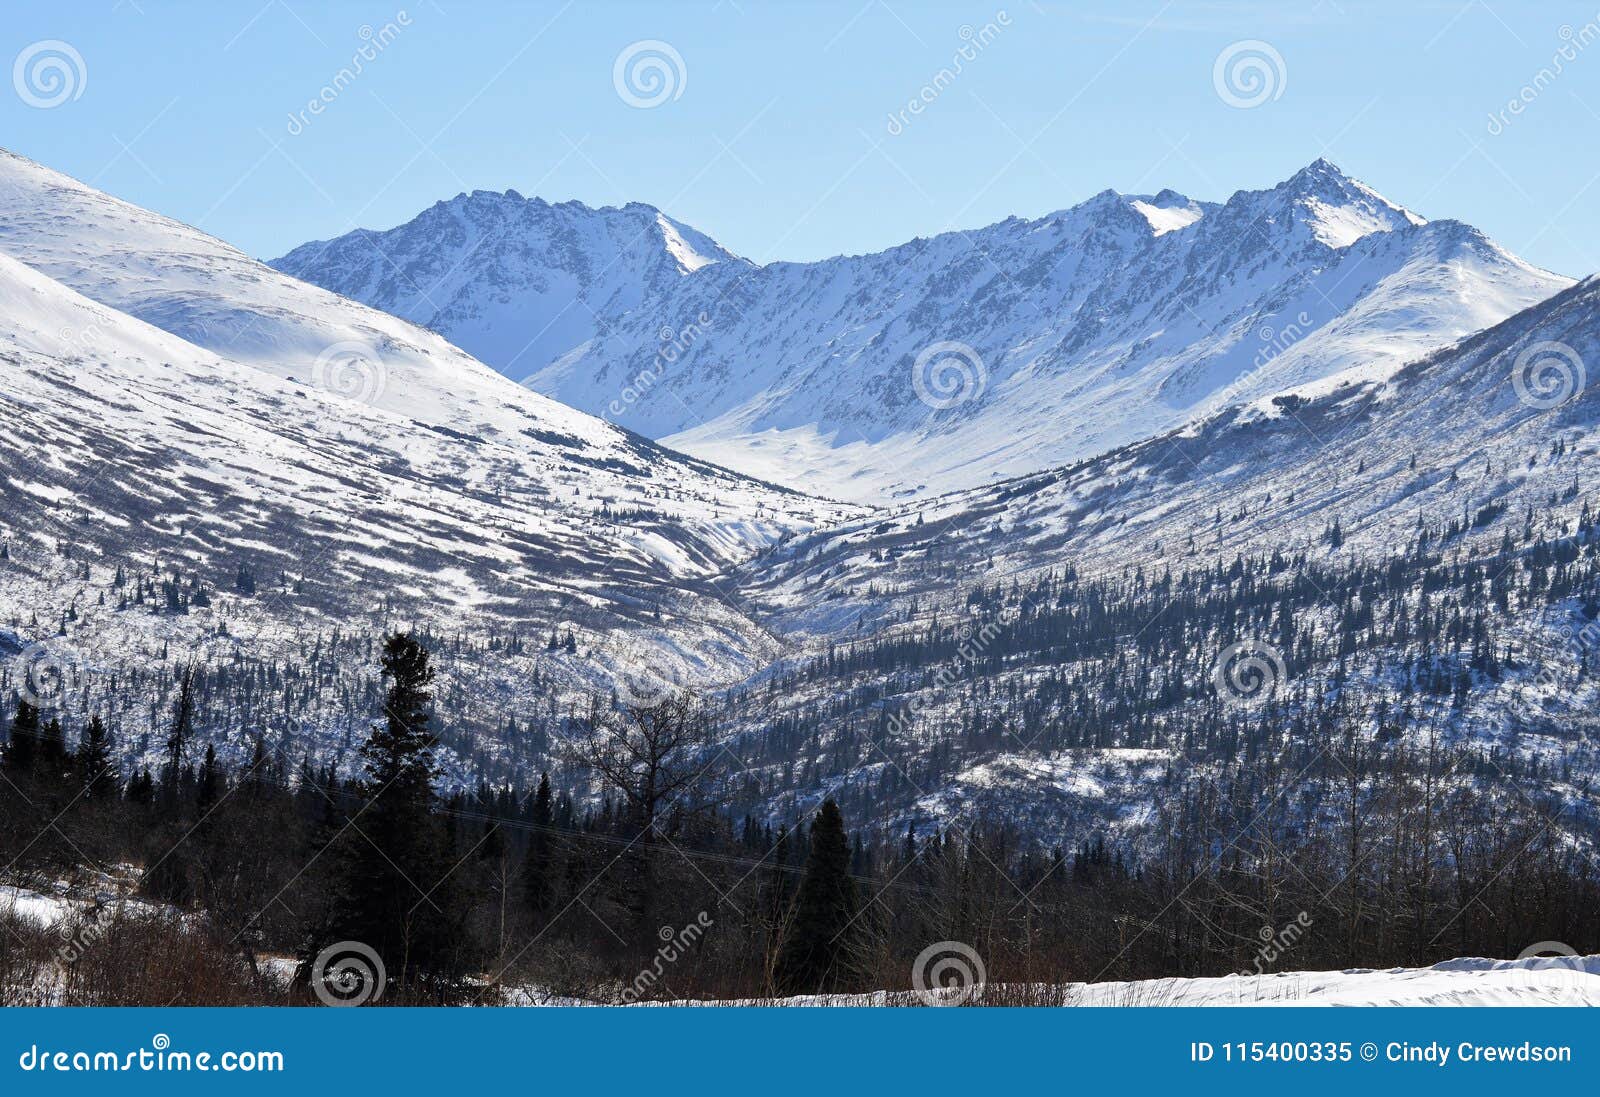 Wintry Snow Capped Peak In Alaska Stock Image Image Of Peak Range